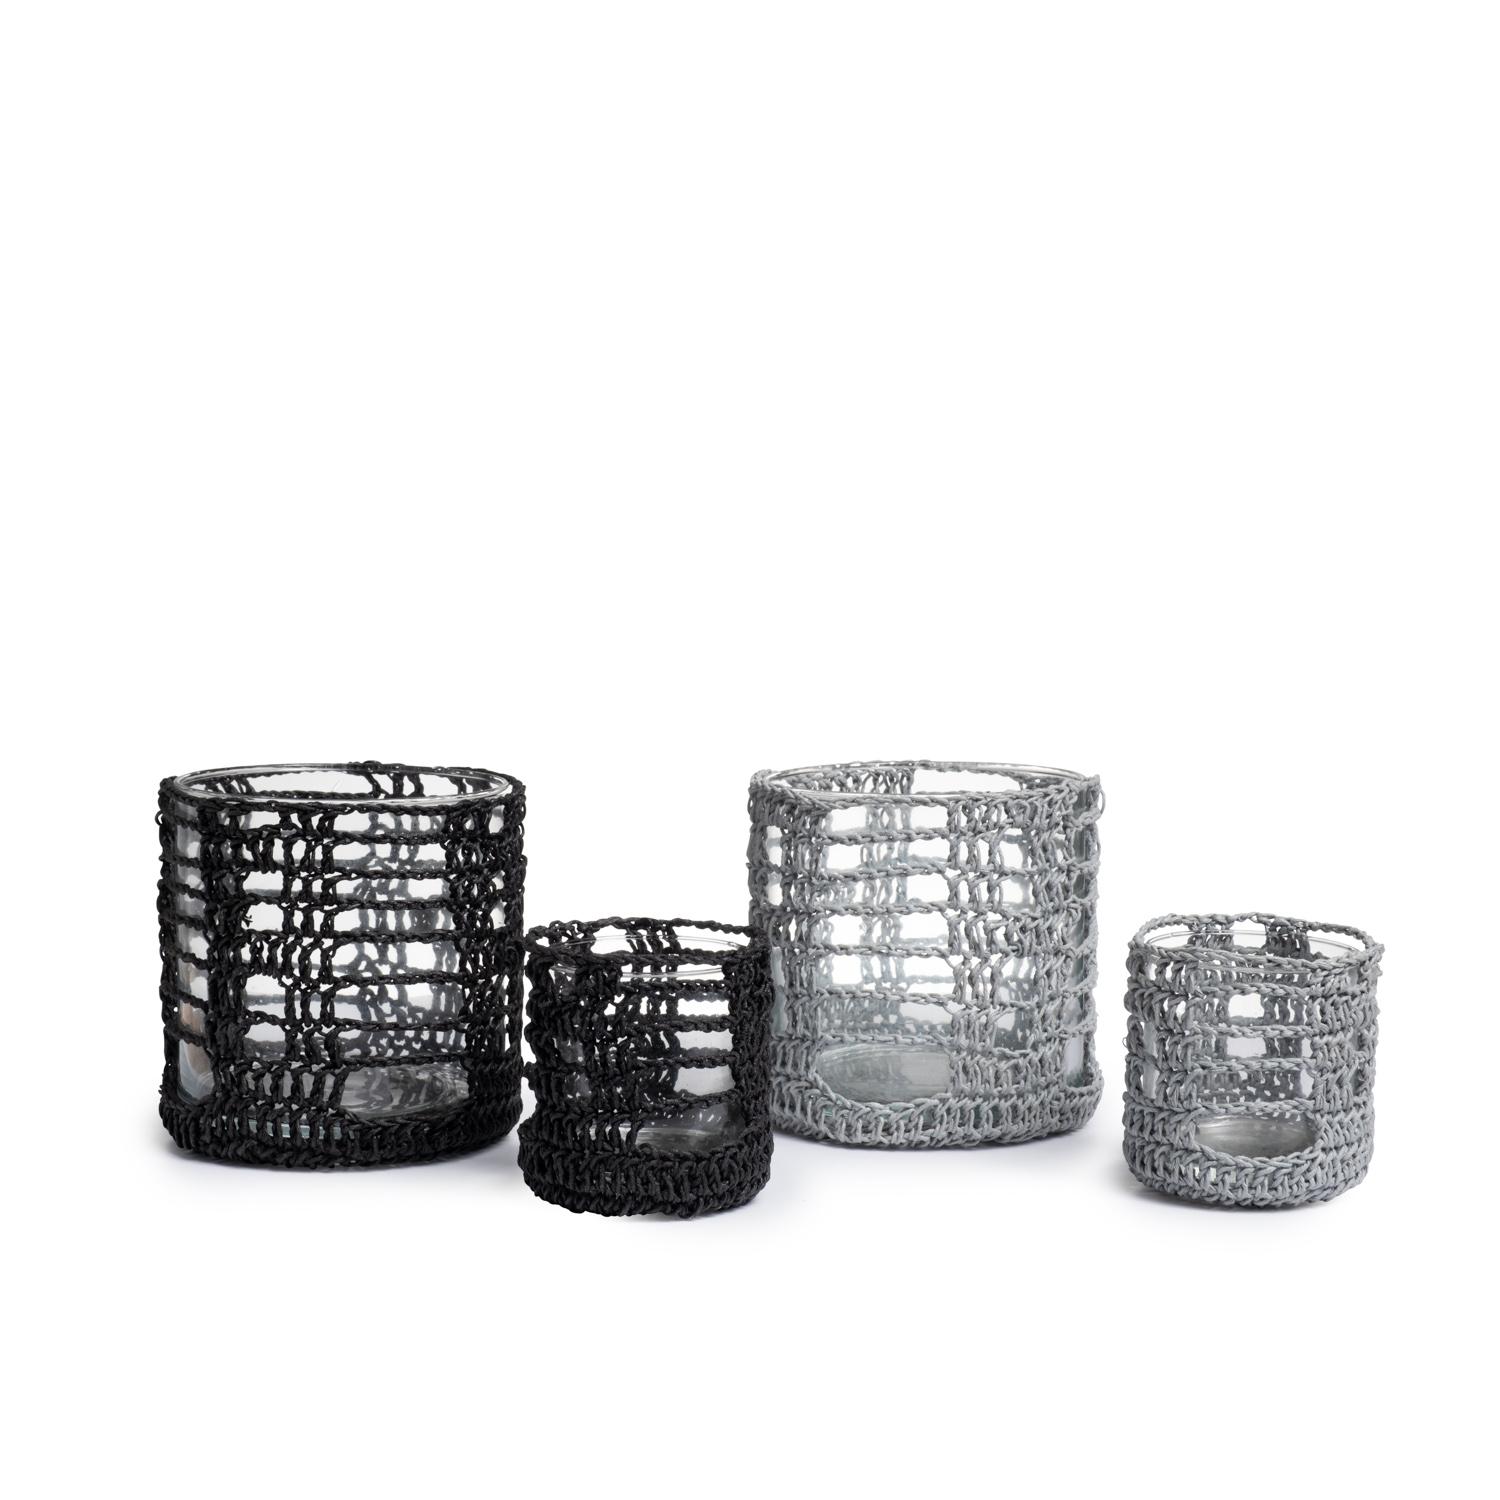 Crocheted Mesh Basket Cylinder - Small - Black